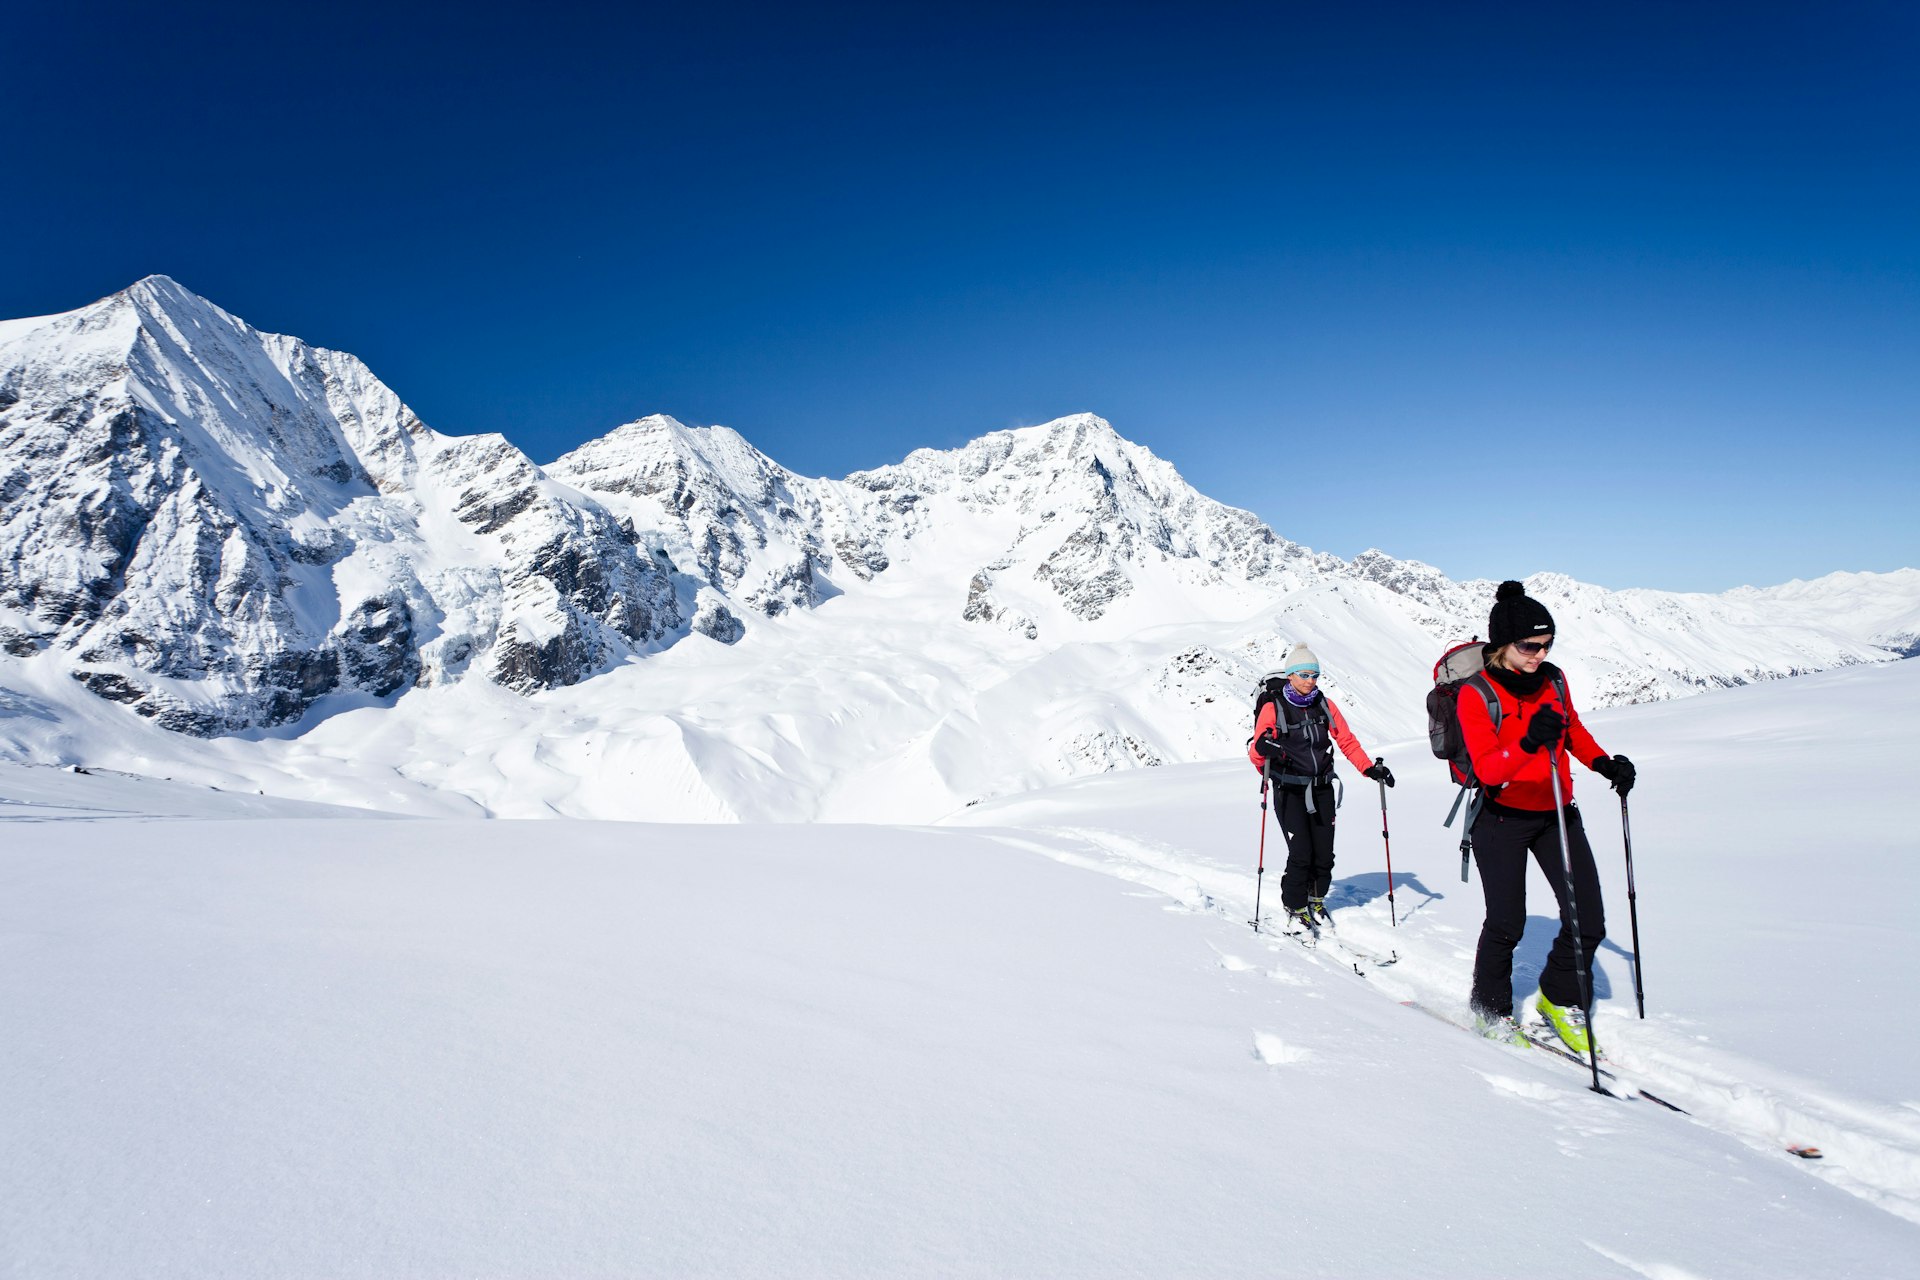 Ski tourers ascending Mt Hintere Schoentaufspitze or Punta Beltovo di Dentro, Mt Koenigsspitze or Grand Zebru, Mt Ortler